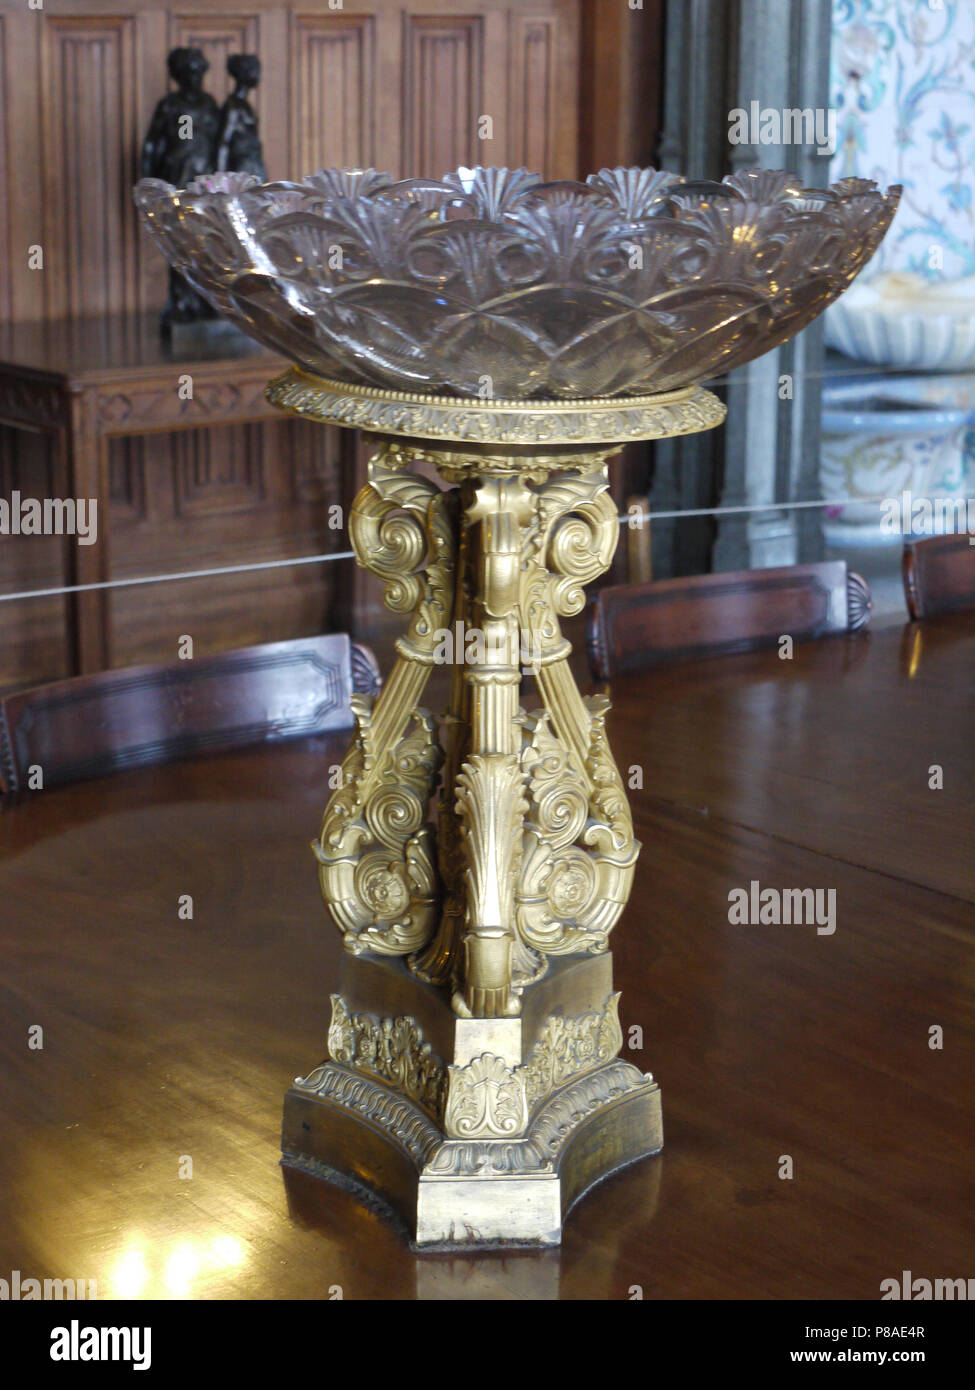 https://c8.alamy.com/compes/p8ae4r/hermoso-jarron-decorativo-sobre-un-pedestal-de-bronce-masivo-para-su-diseno-p8ae4r.jpg